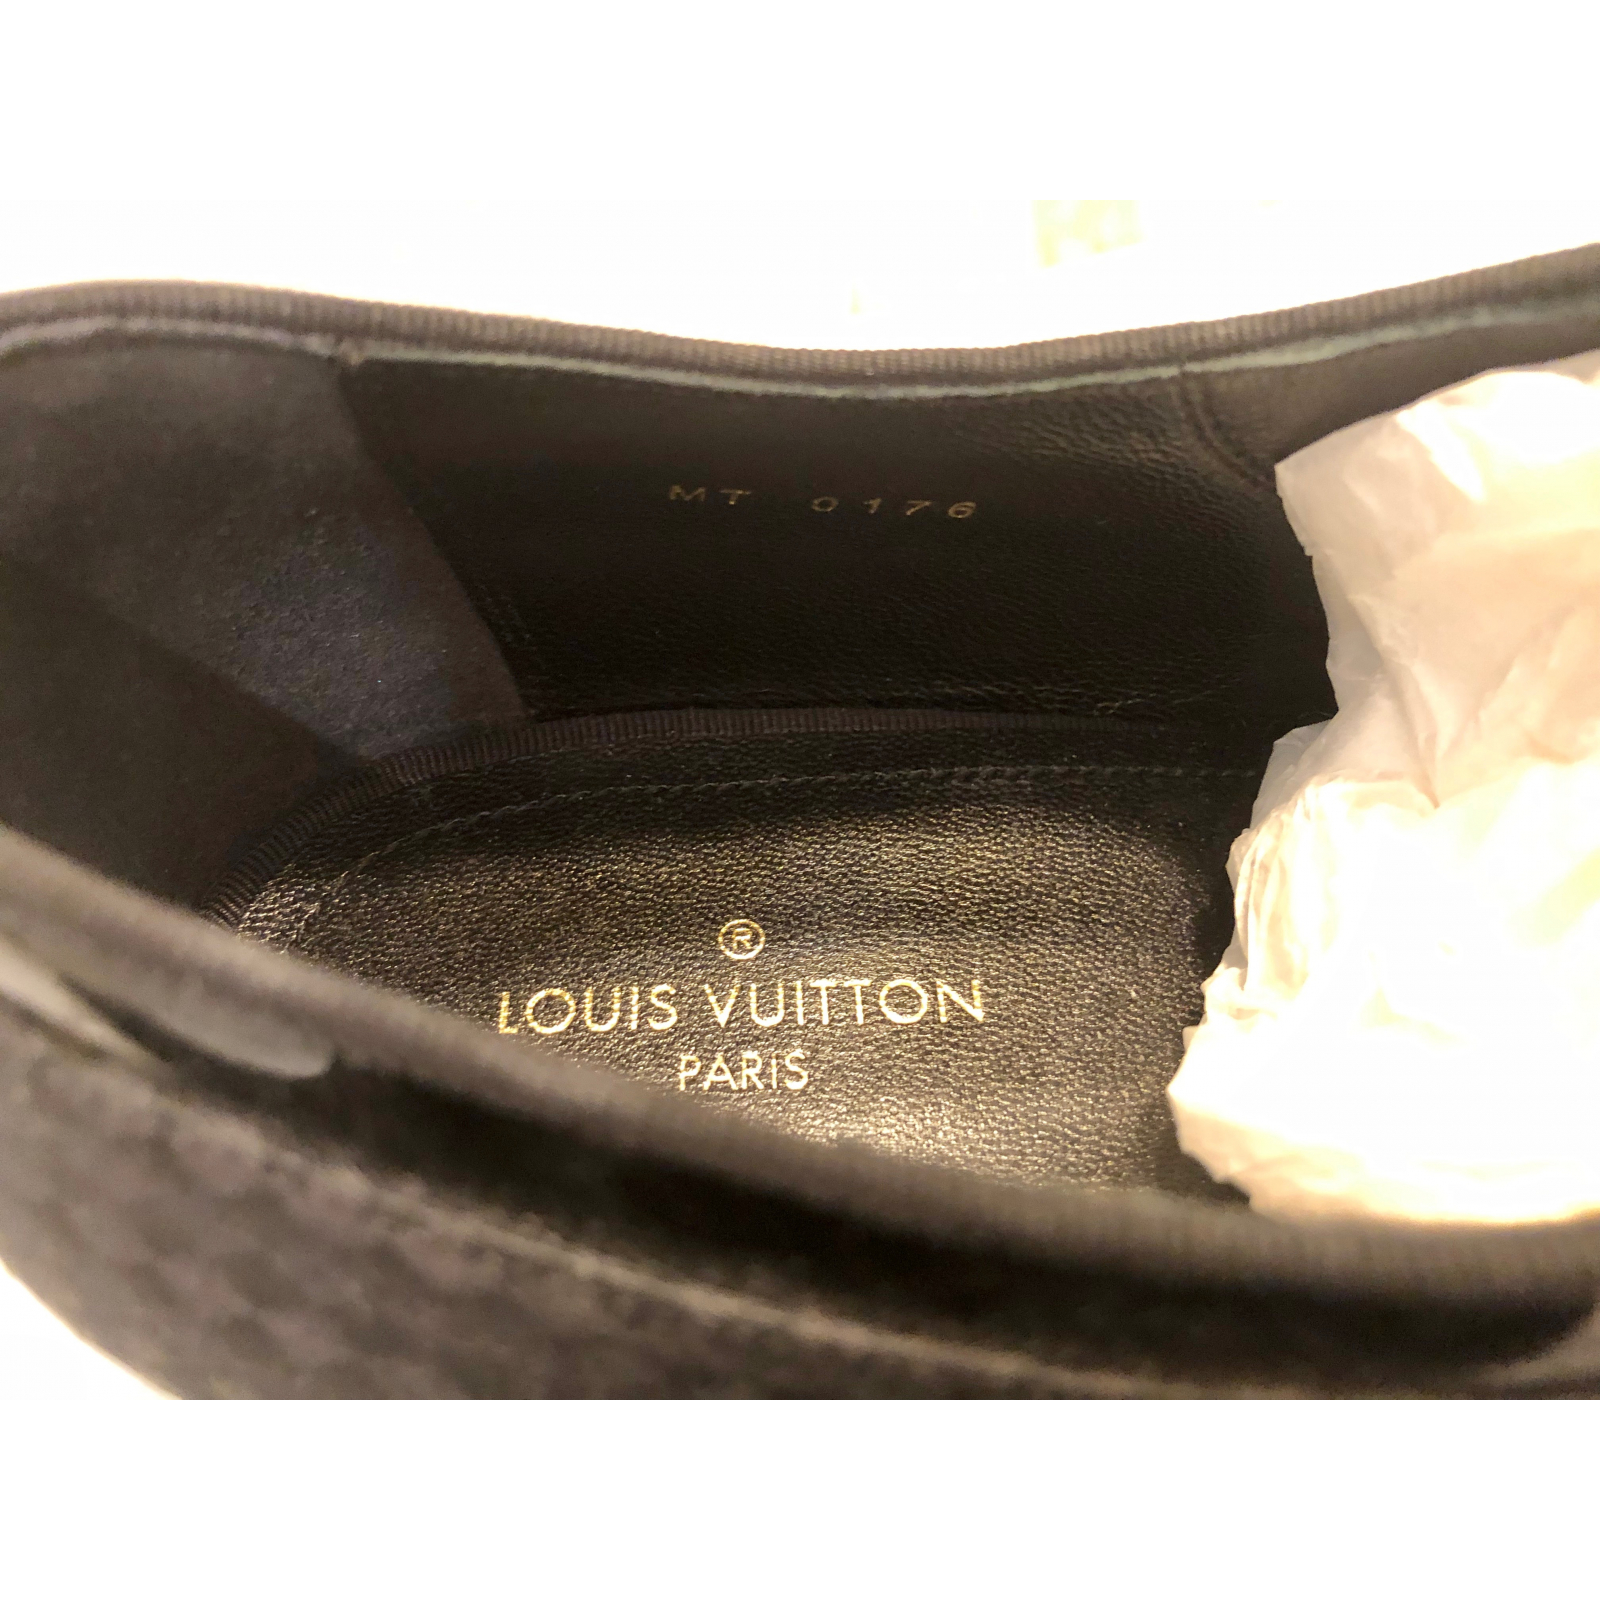 Solferino Louis Vuitton